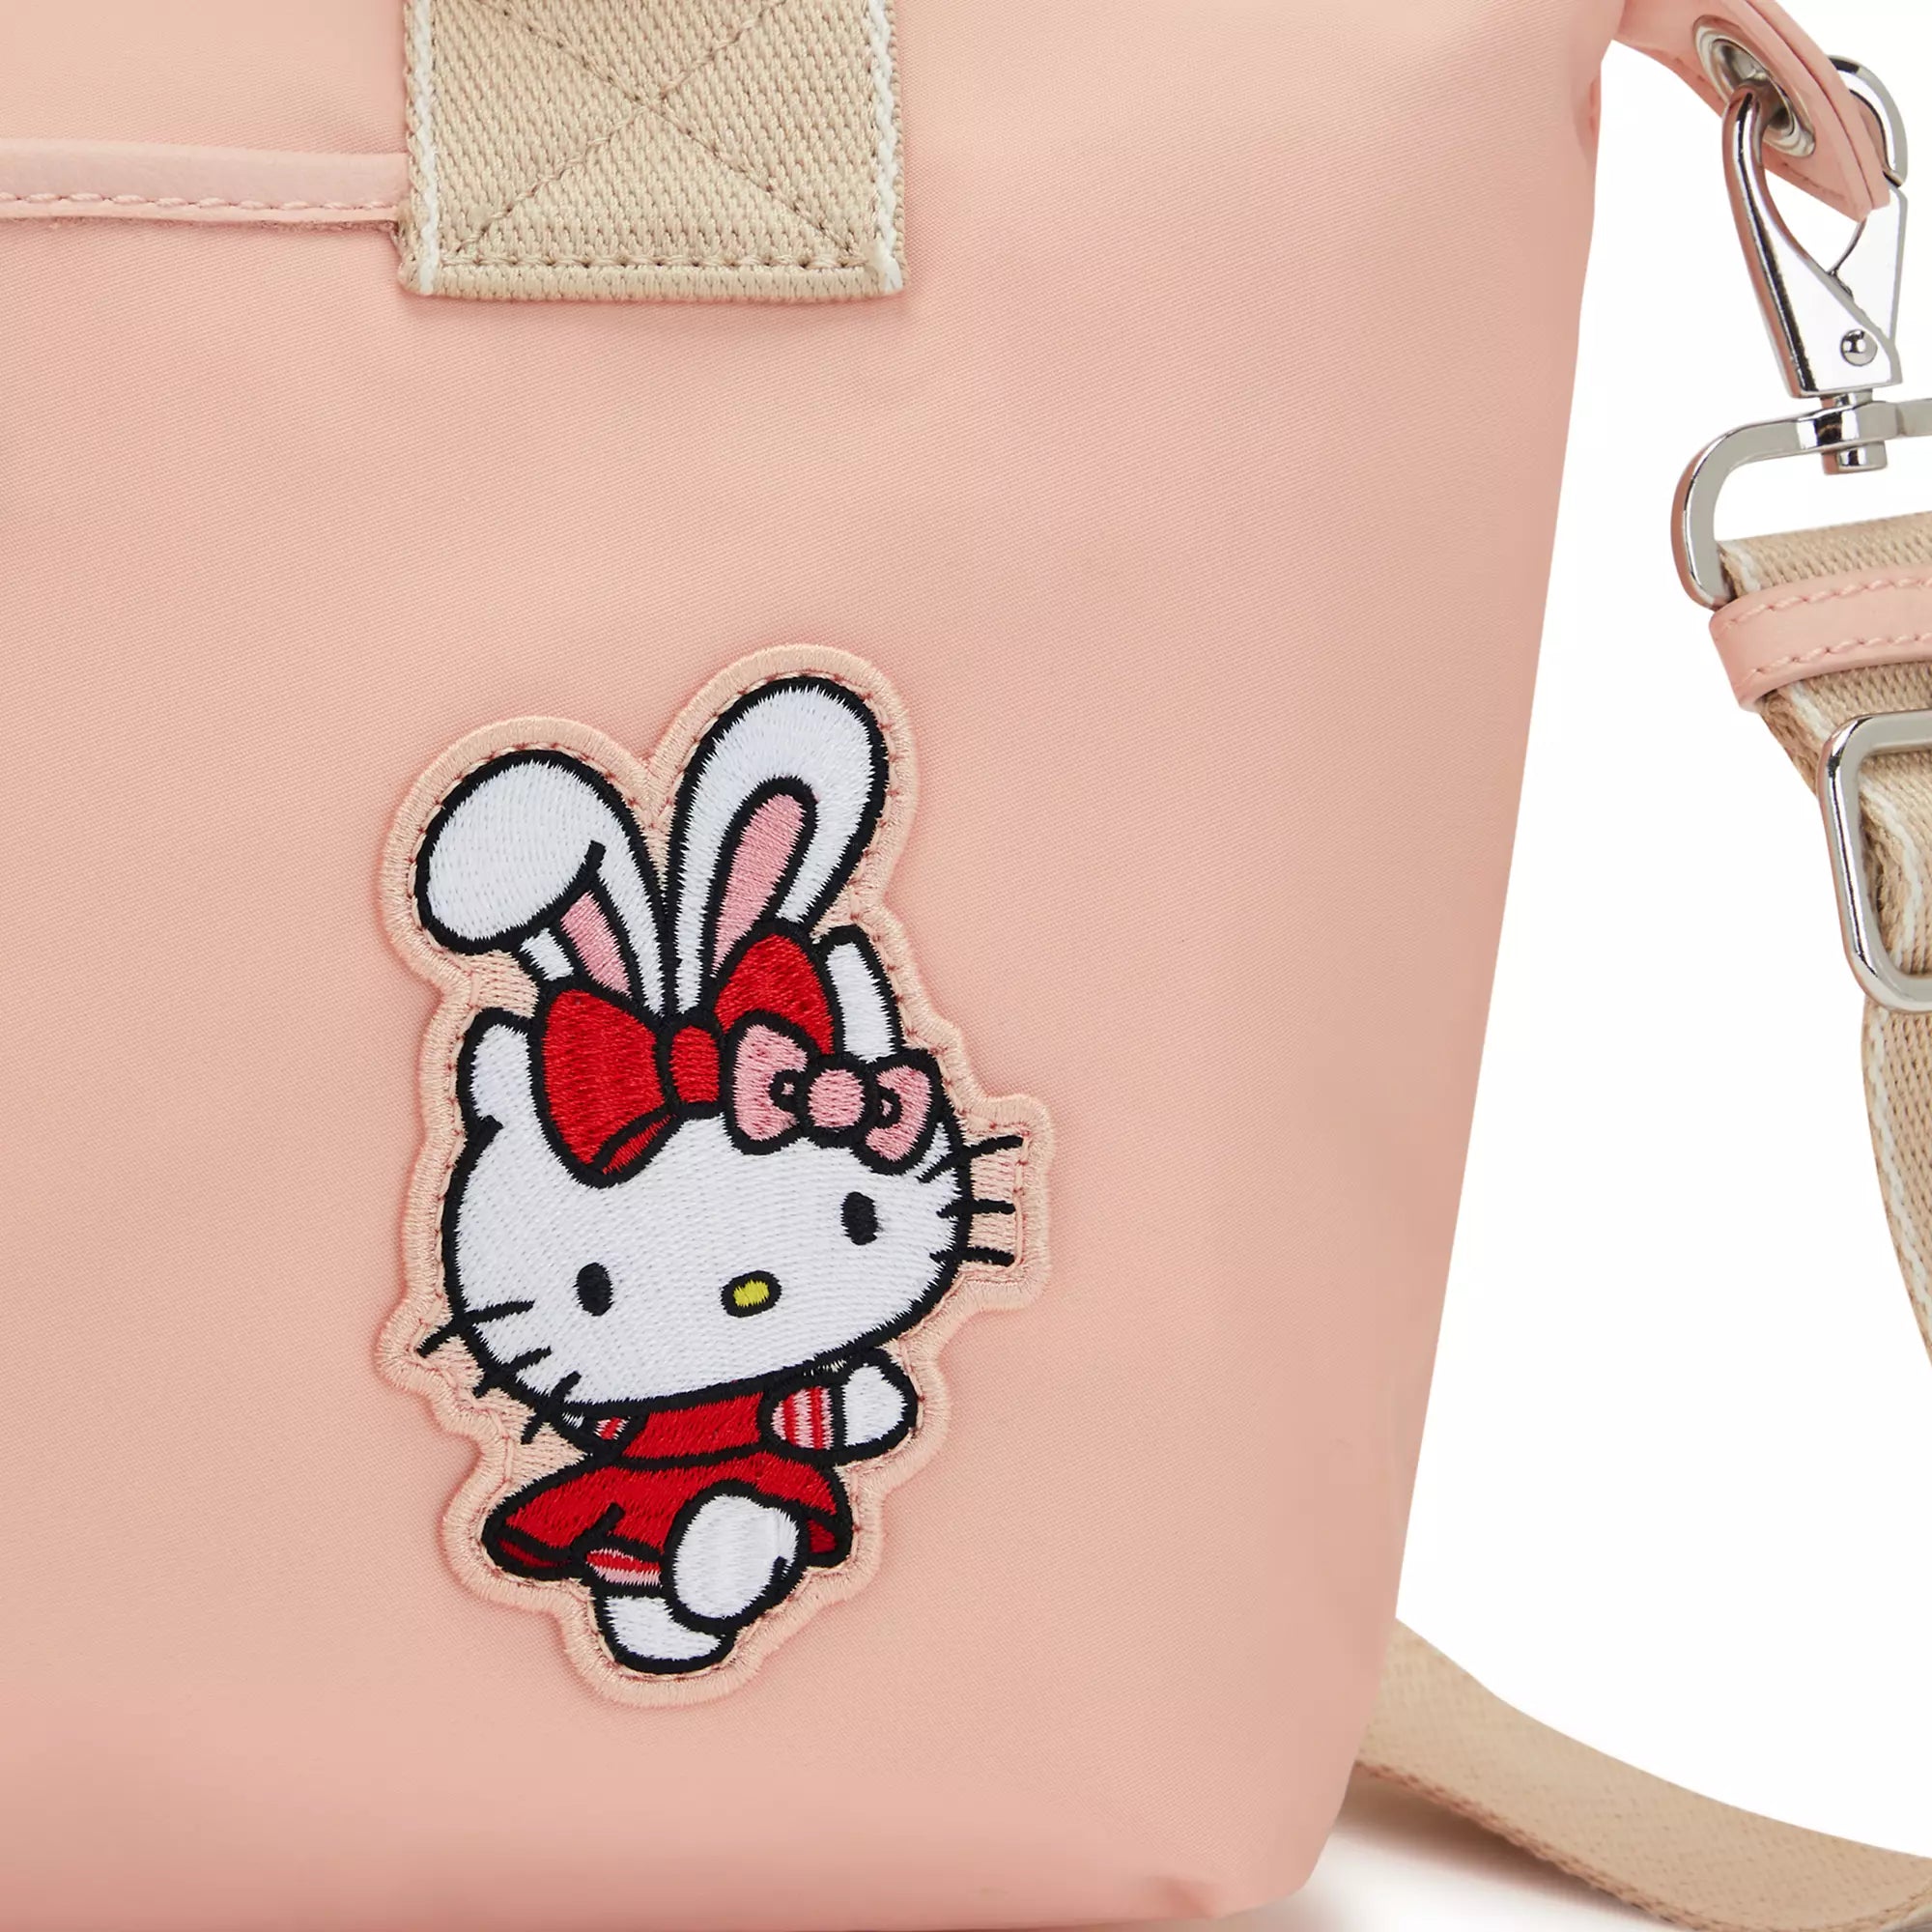 Hello x Kitty Kipling Year of the Rabbit Kala Mini Handbag Bags Kipling Retail LLC   